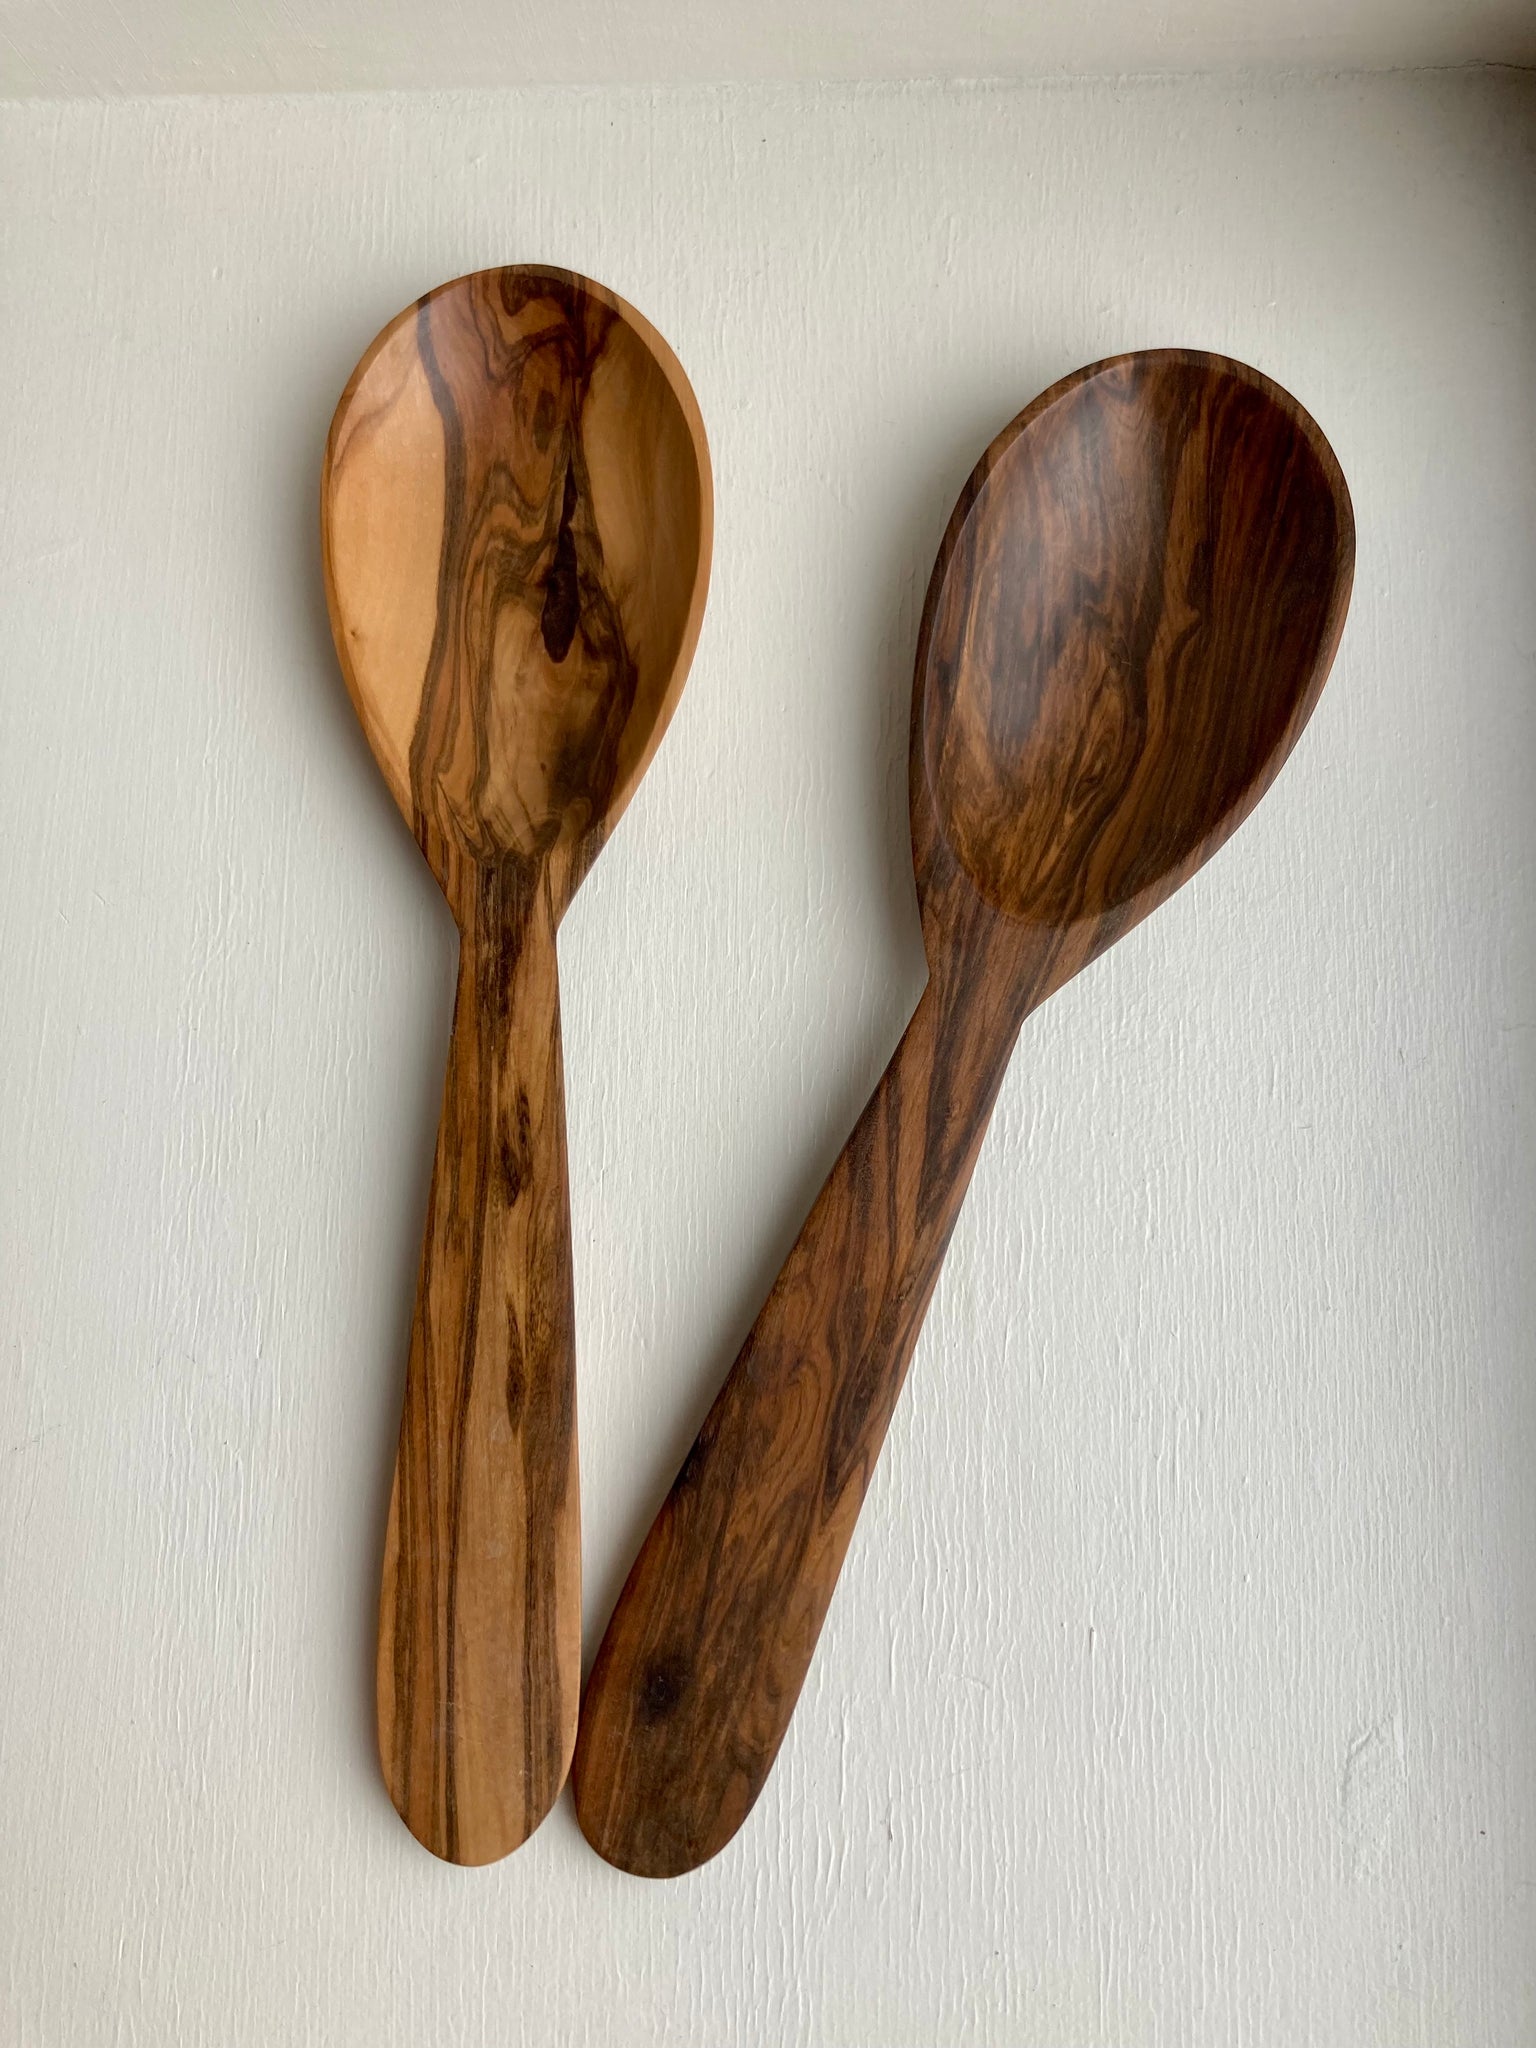 Spoon - Wooden medium size